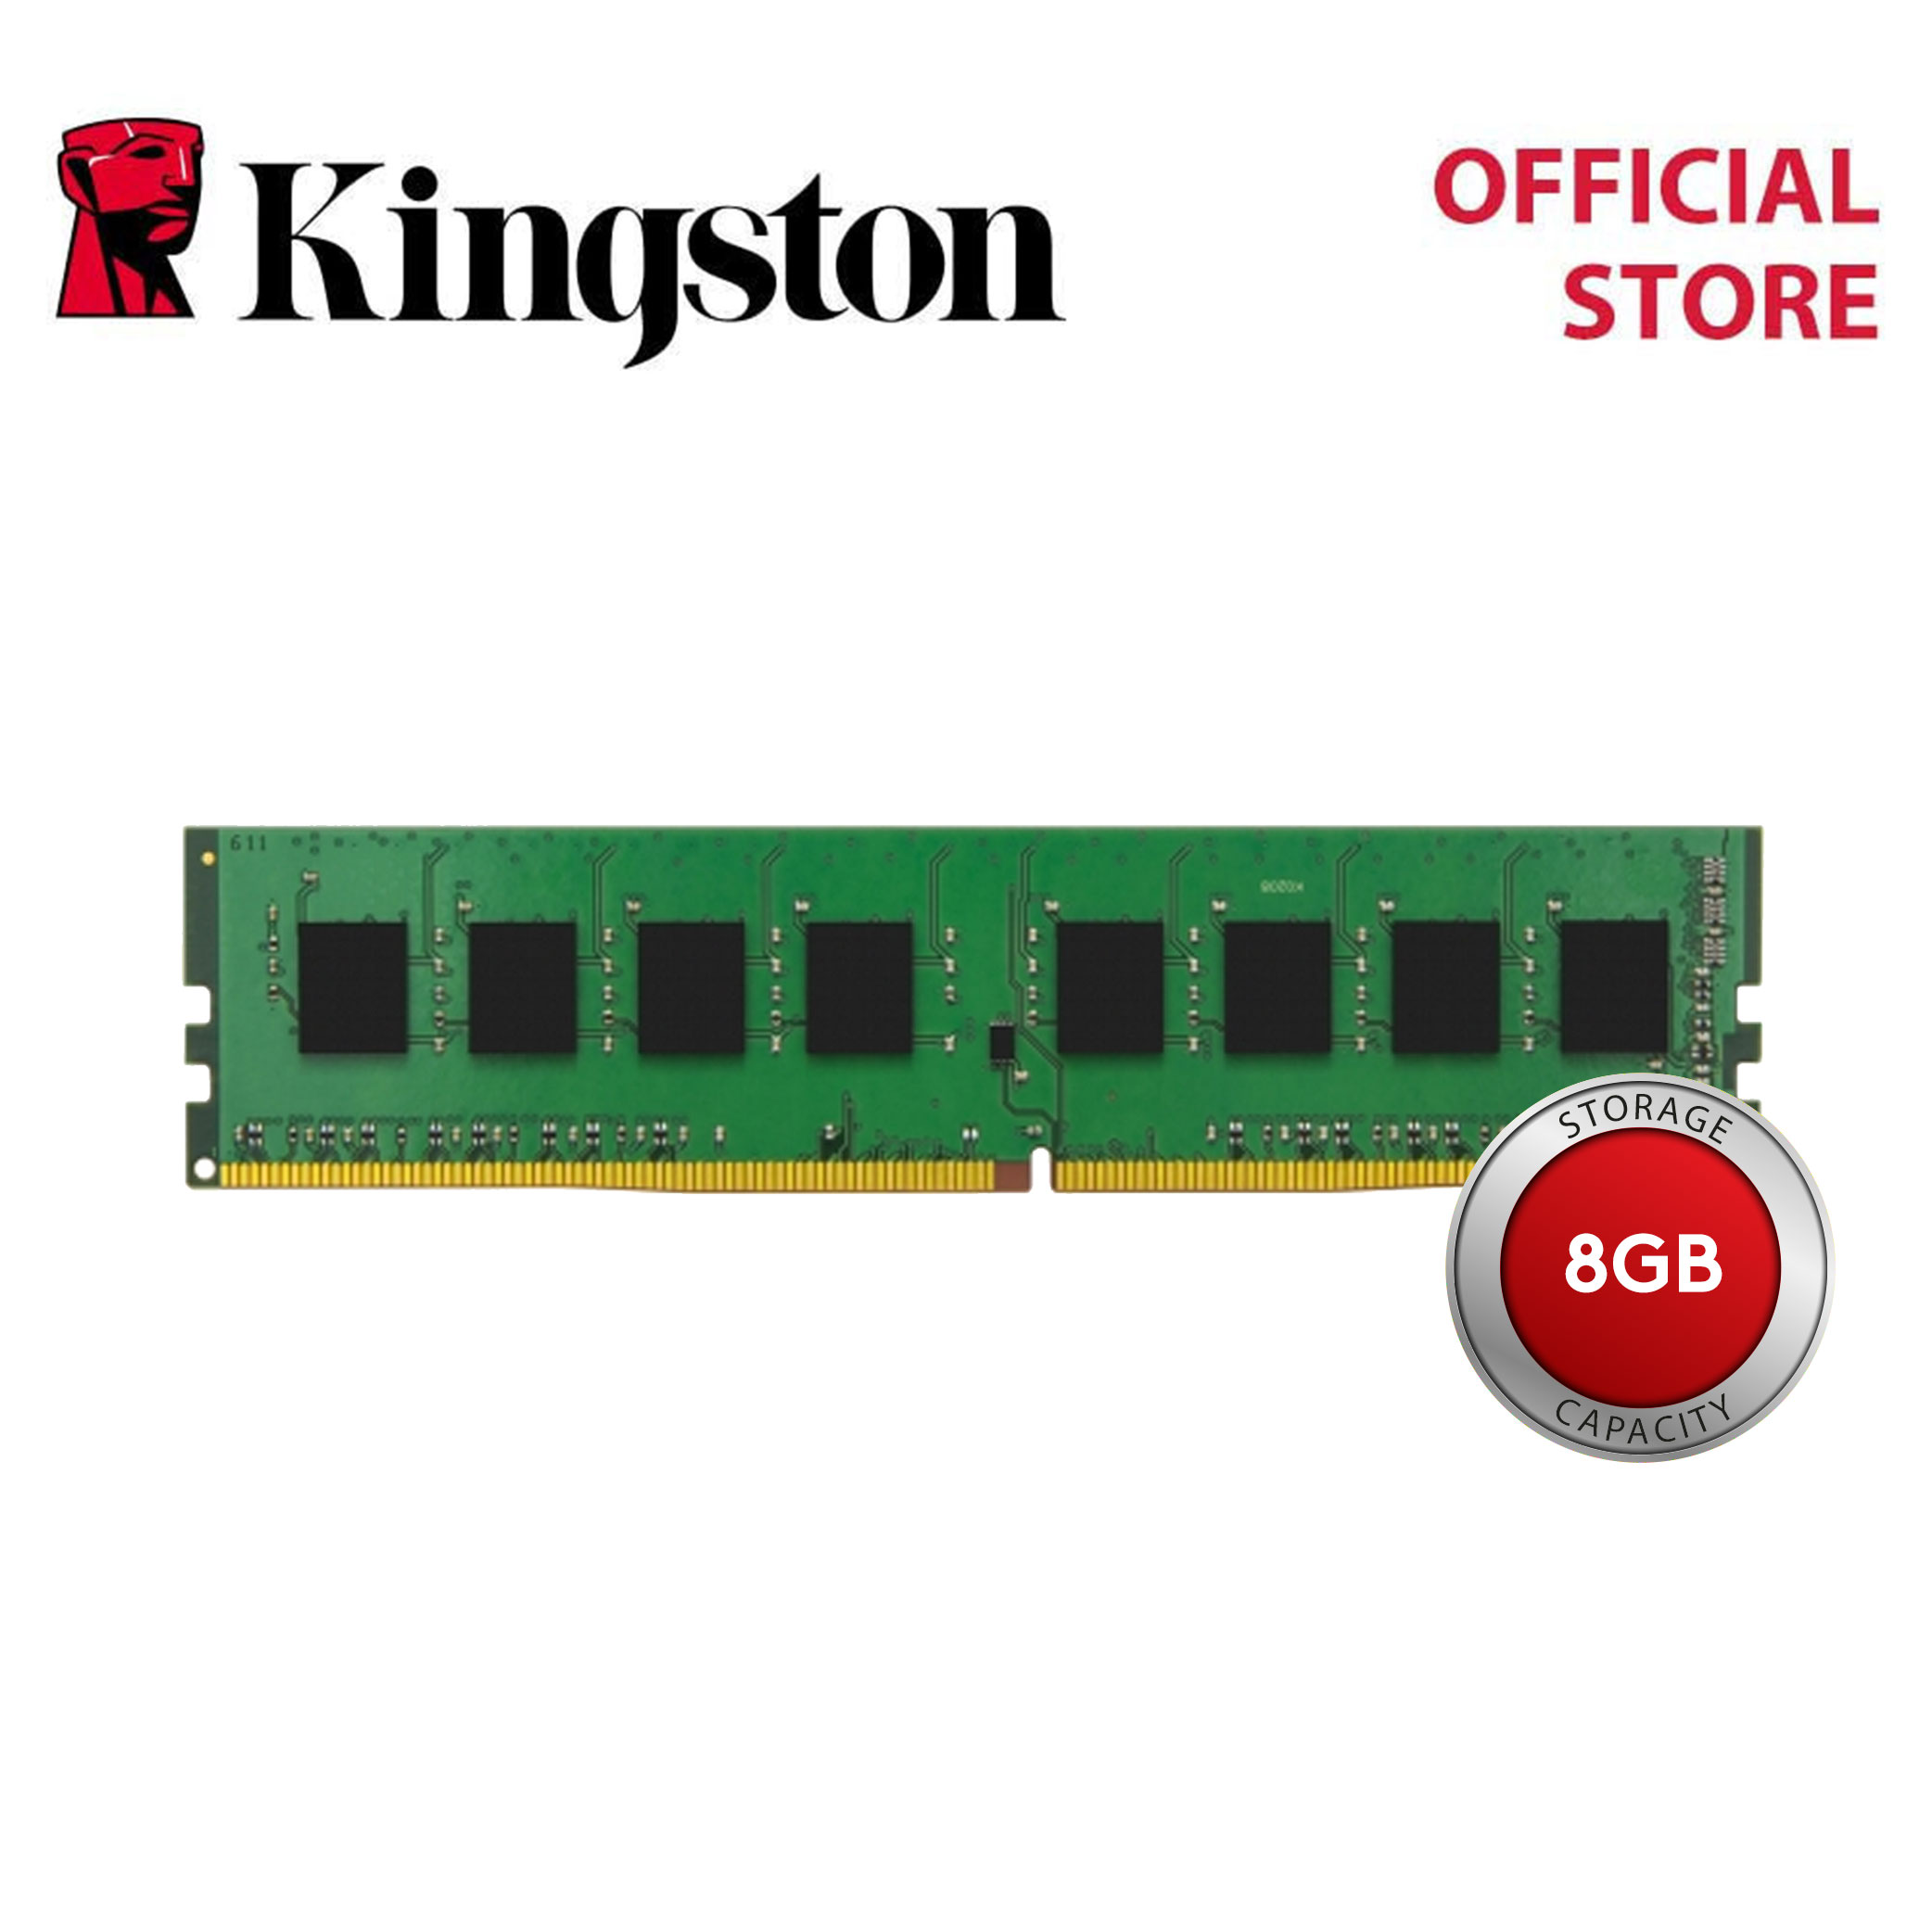 dishonest Eloquent Dial Buy Kingston RAM Online | lazada.com.ph